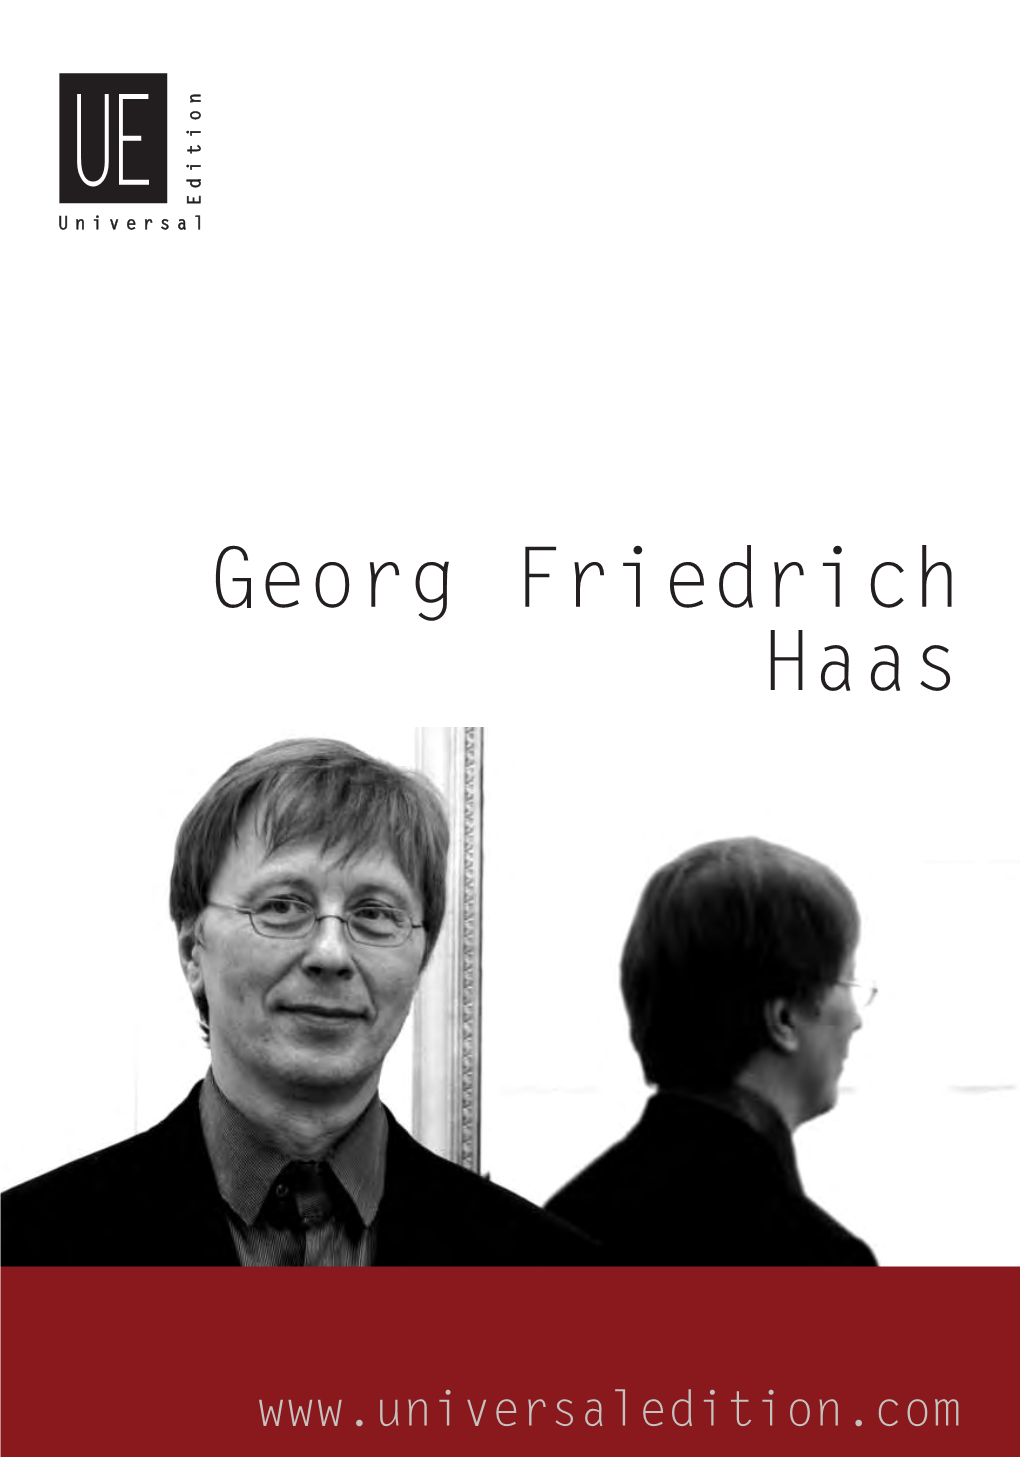 Georg Friedrich Haas